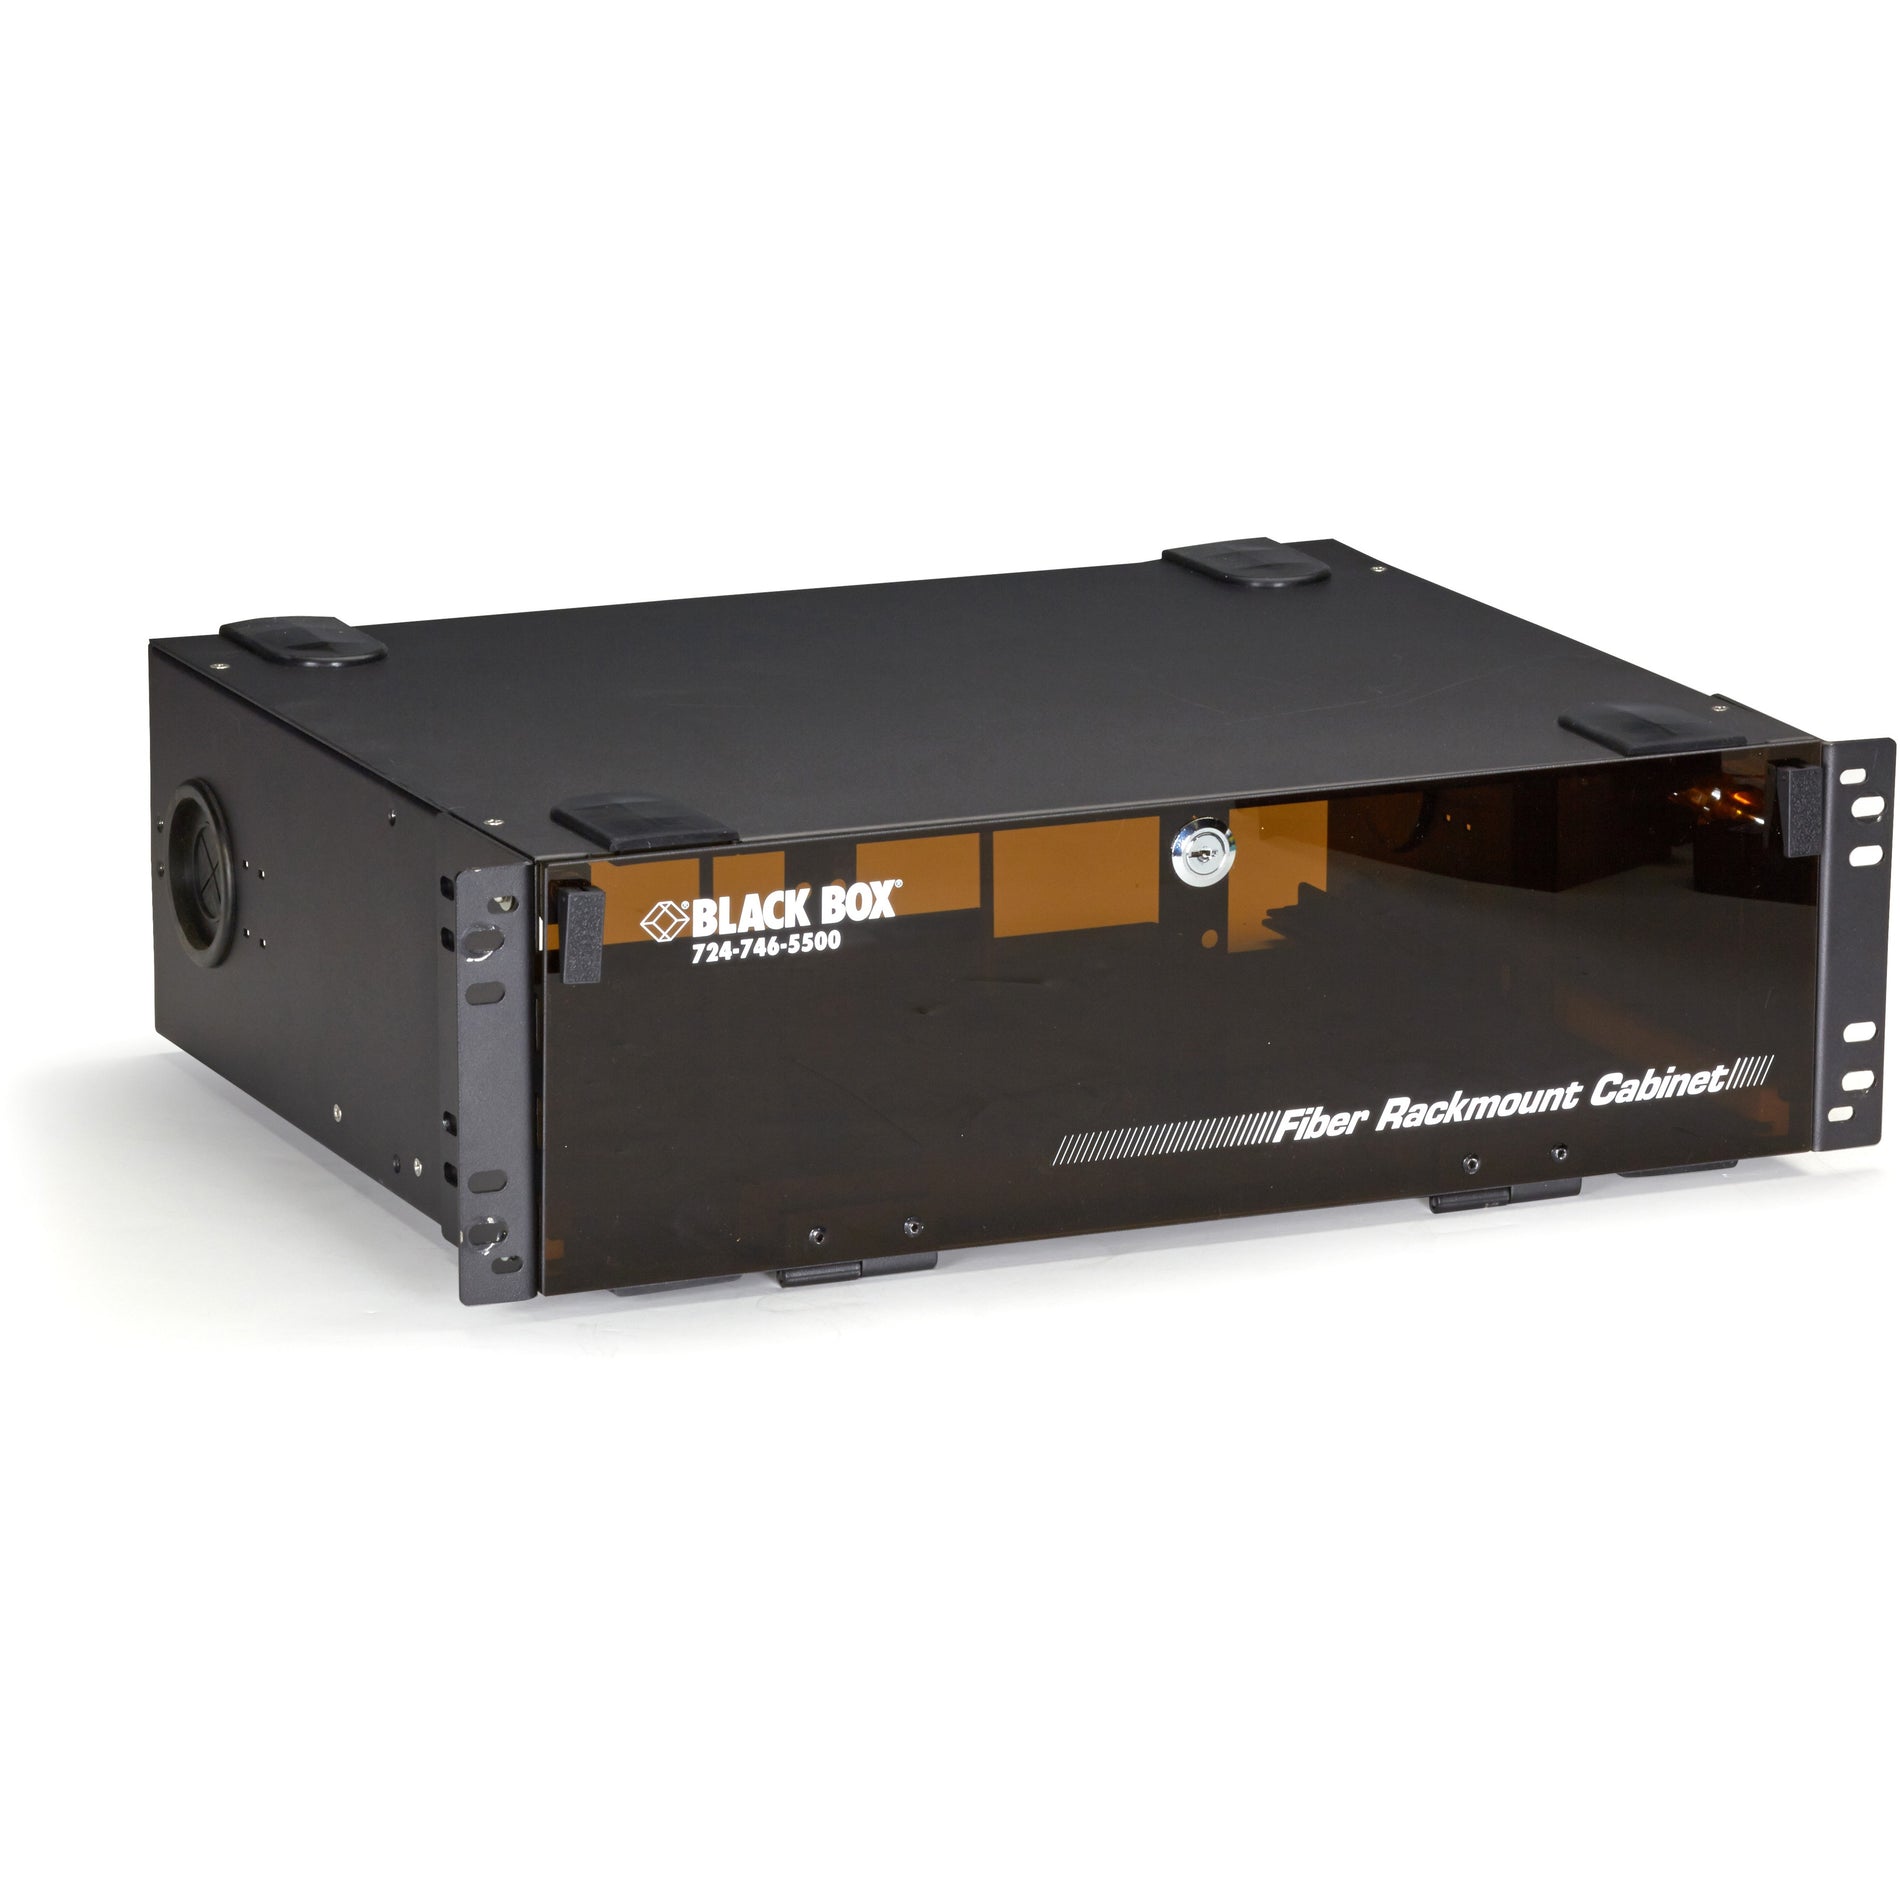 Black Box JPM406A-R6 Rackmount Fiber Enclosure - 3U, Adjustable Mounting Bracket, Cable Management